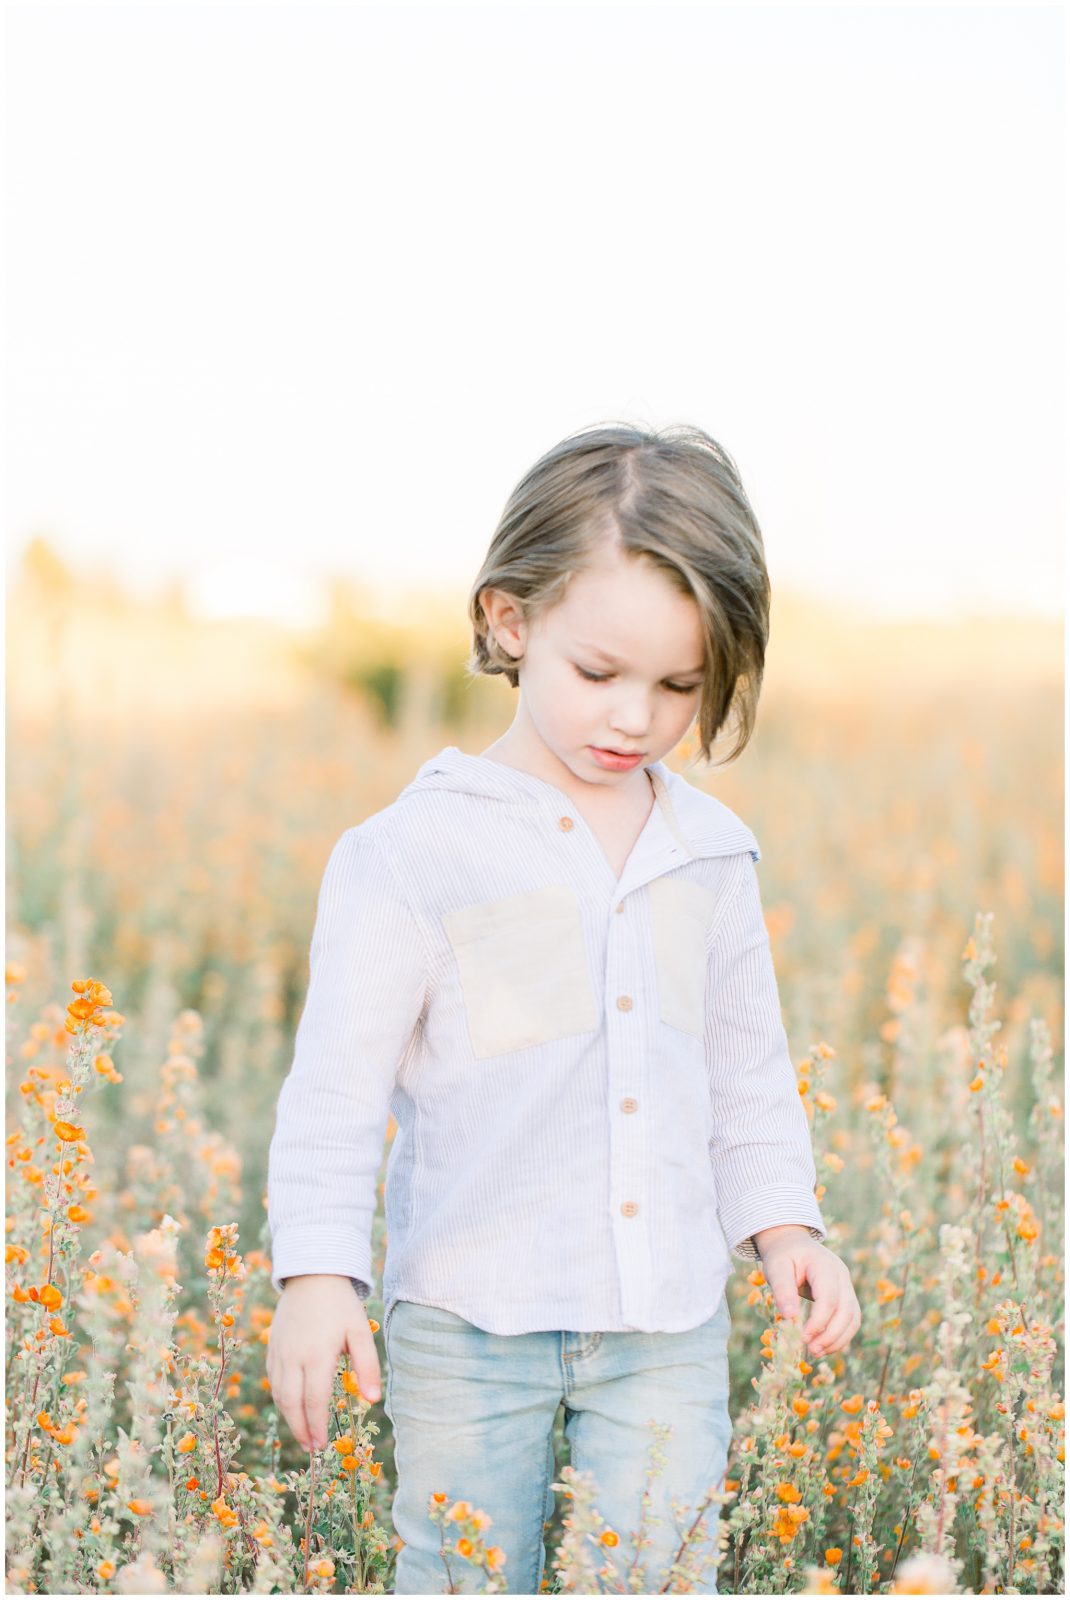 Aly-Kirk-Photo-Mesa-Arizona-Photographer-Family-Field-Flowers